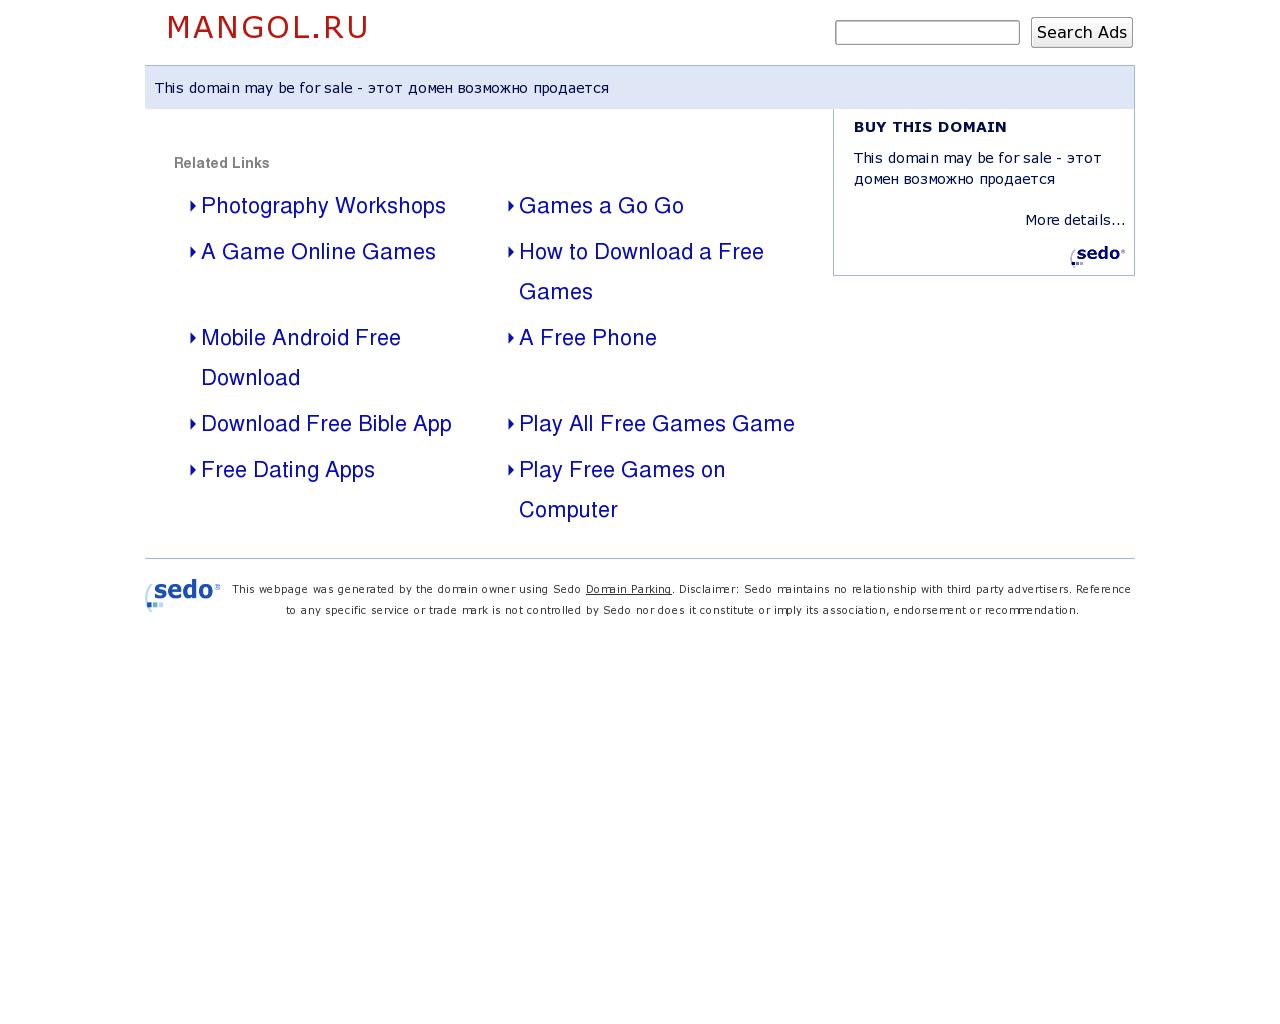 Изображение сайта mangol.ru в разрешении 1280x1024